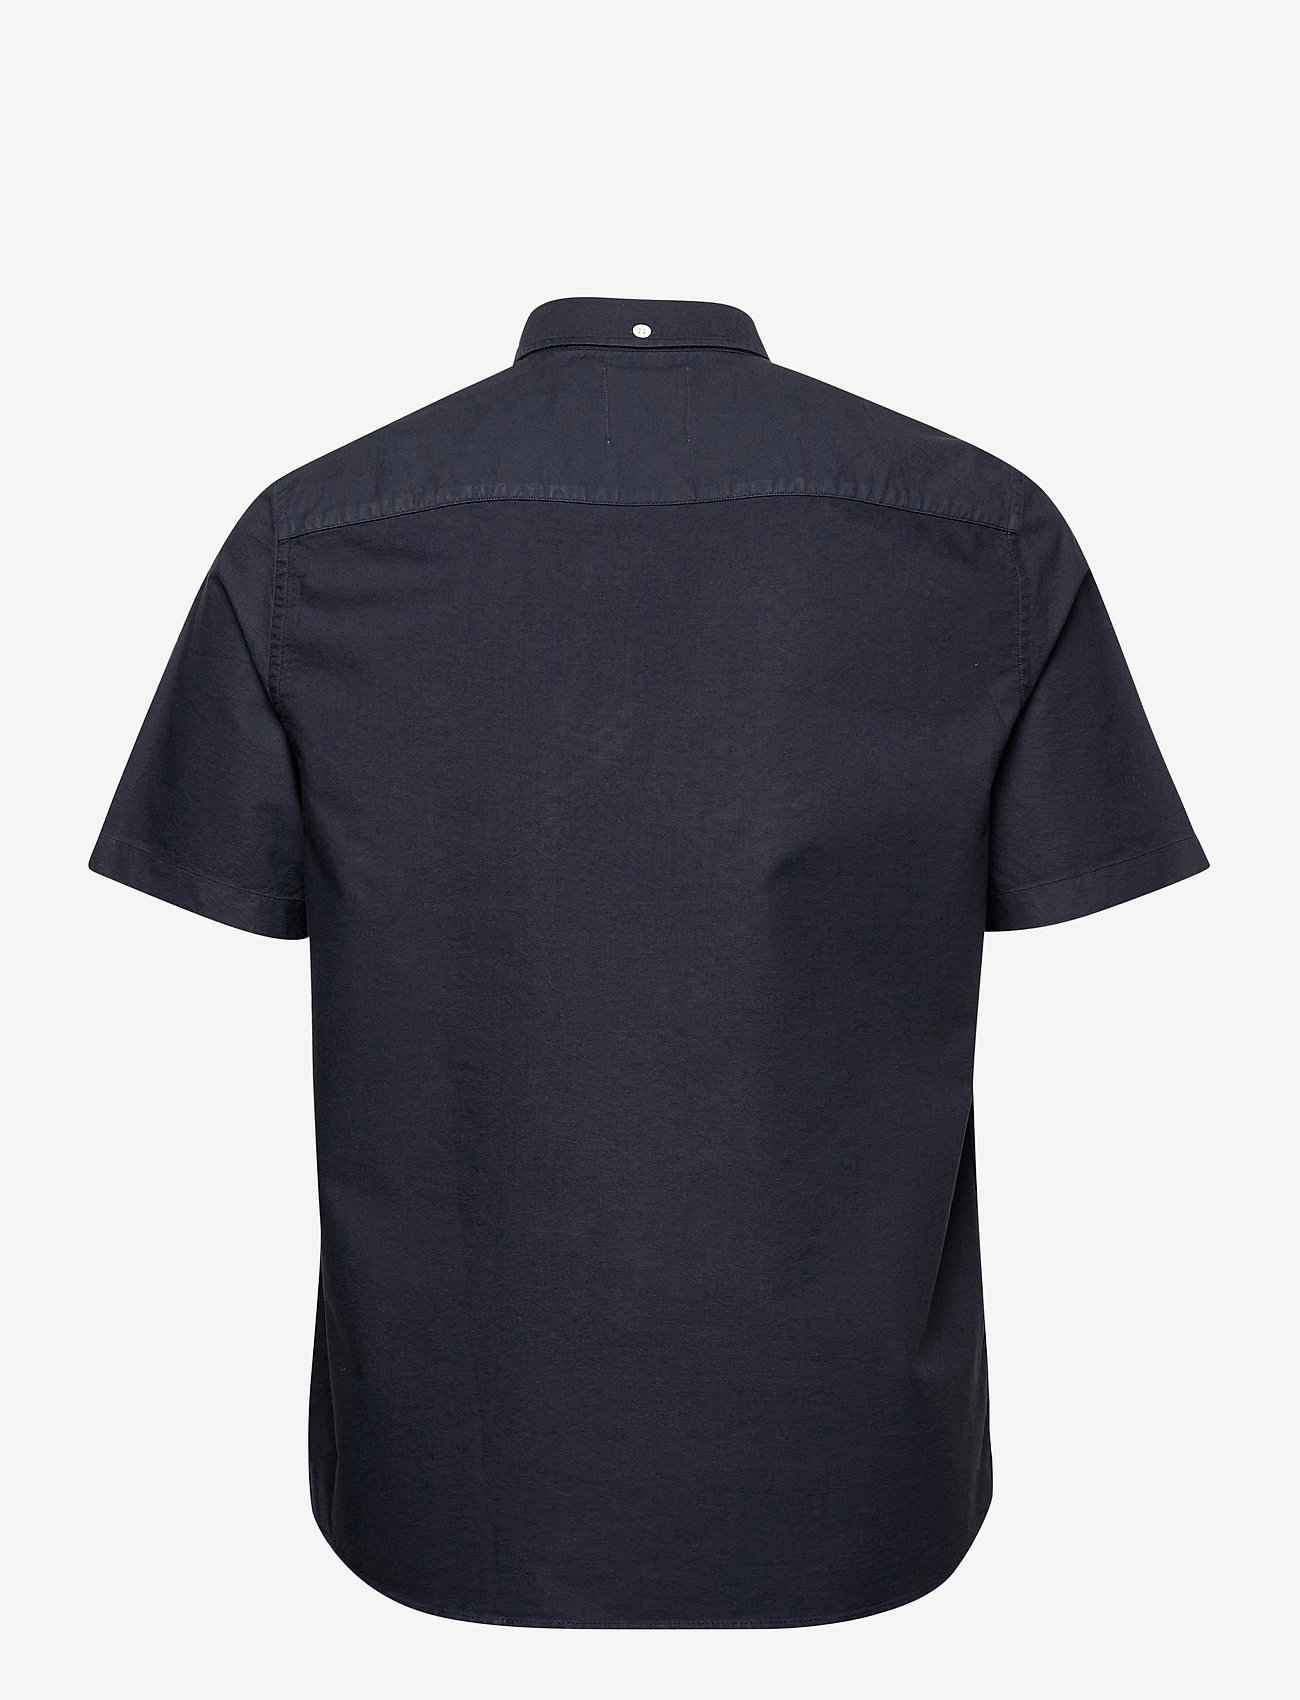 Wood Wood - Michael oxford shirt SS - kortärmade t-shirts - navy - 1